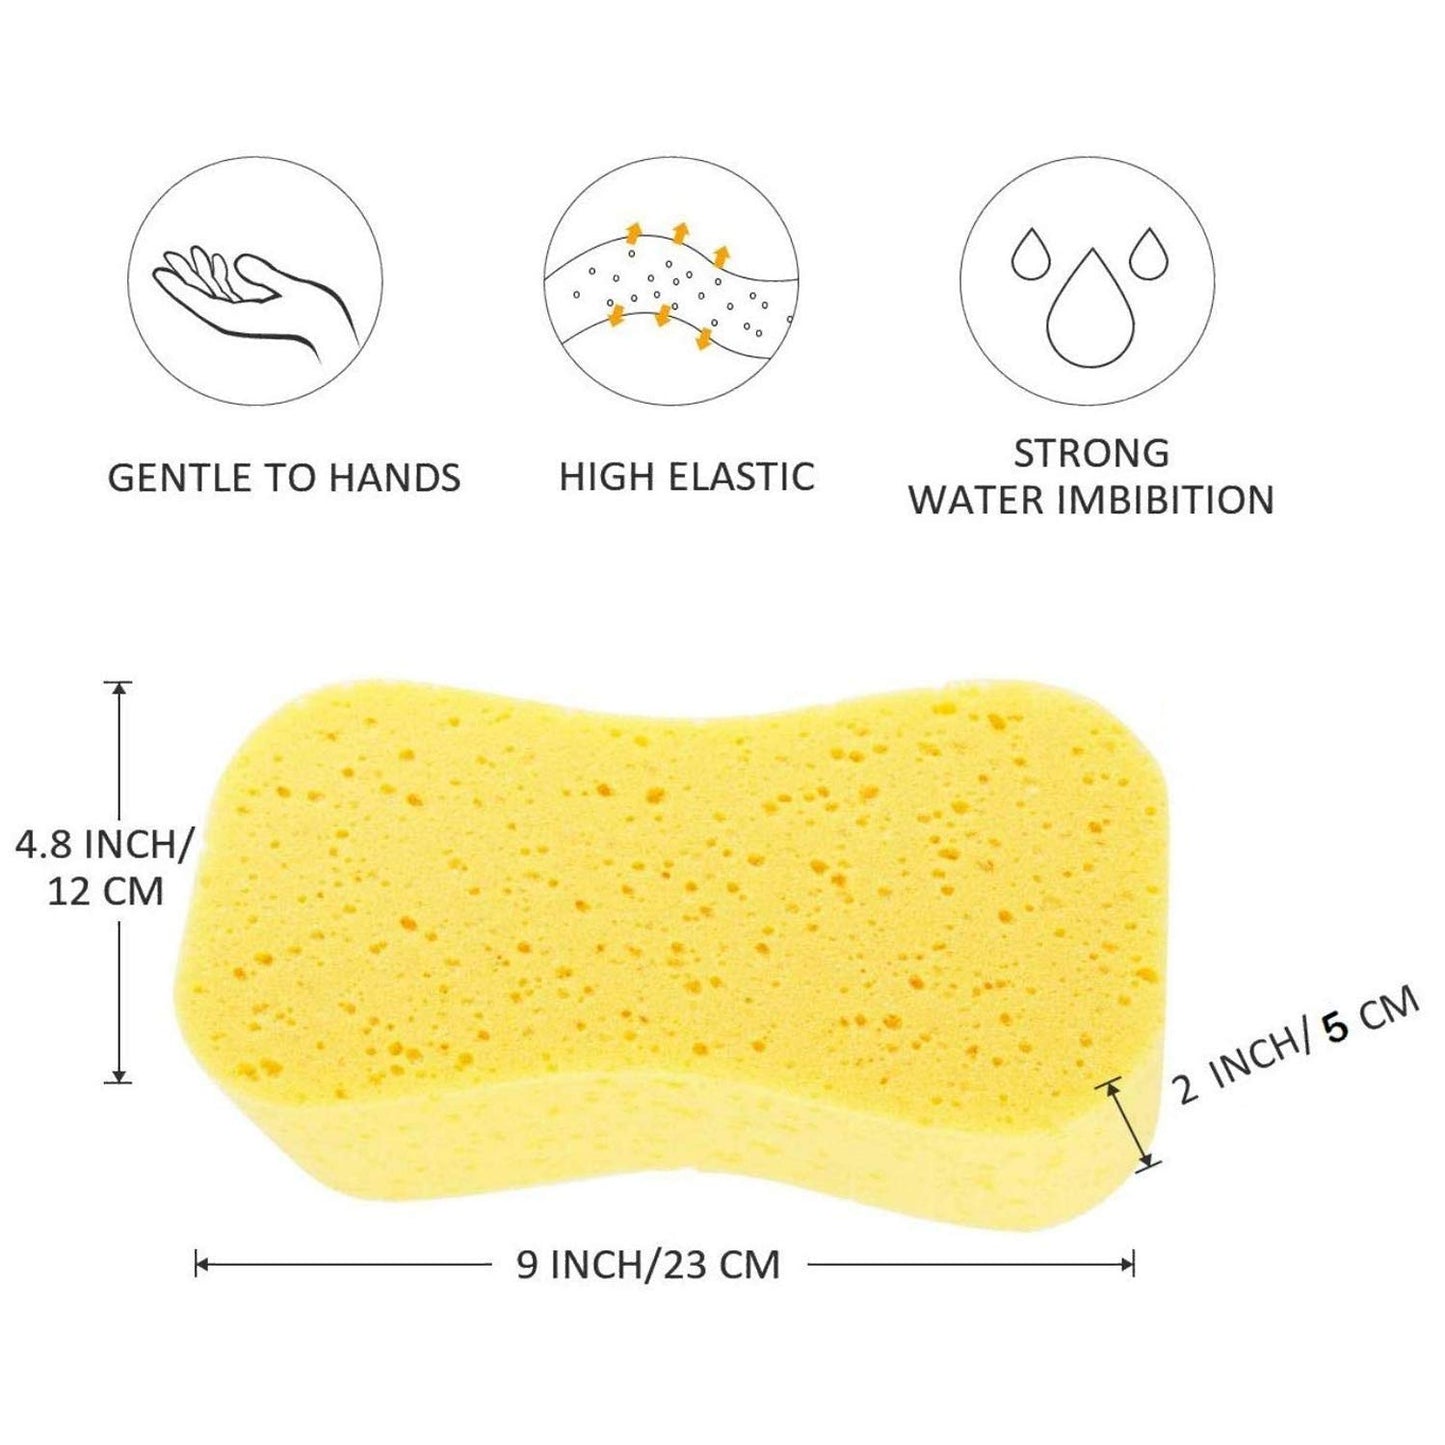 CAR SAAZ® Premium Super Absorbent Multipurpose Yellow Sponge (Pack of 1)